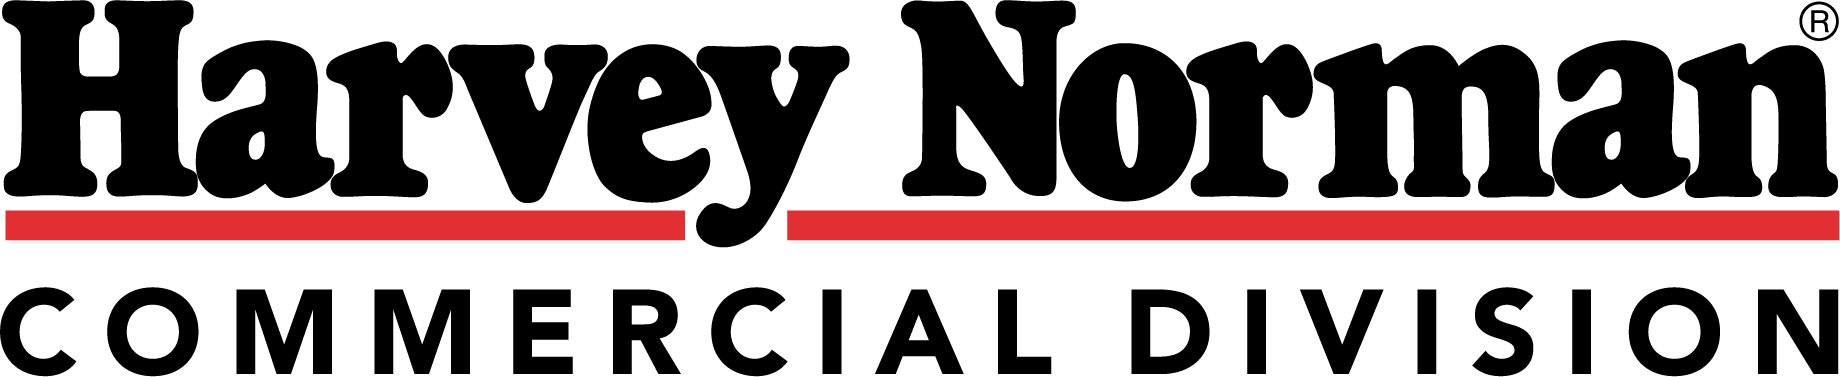 Harvey Norman sponsor logo